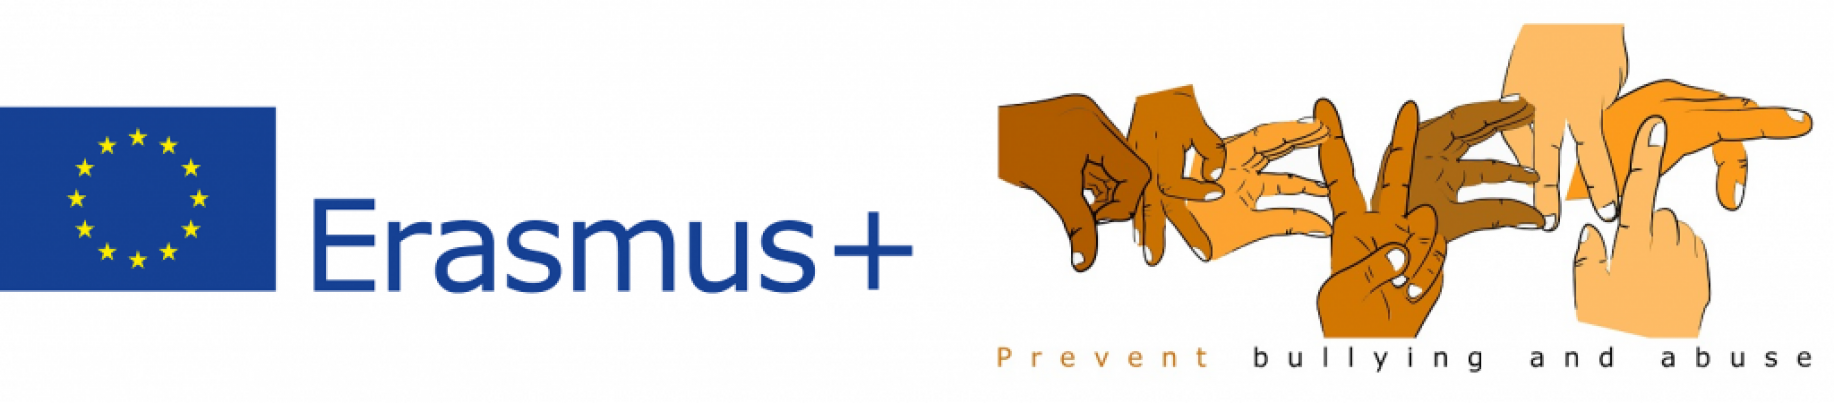 erasmus_prevent_logo-1024x225-403px